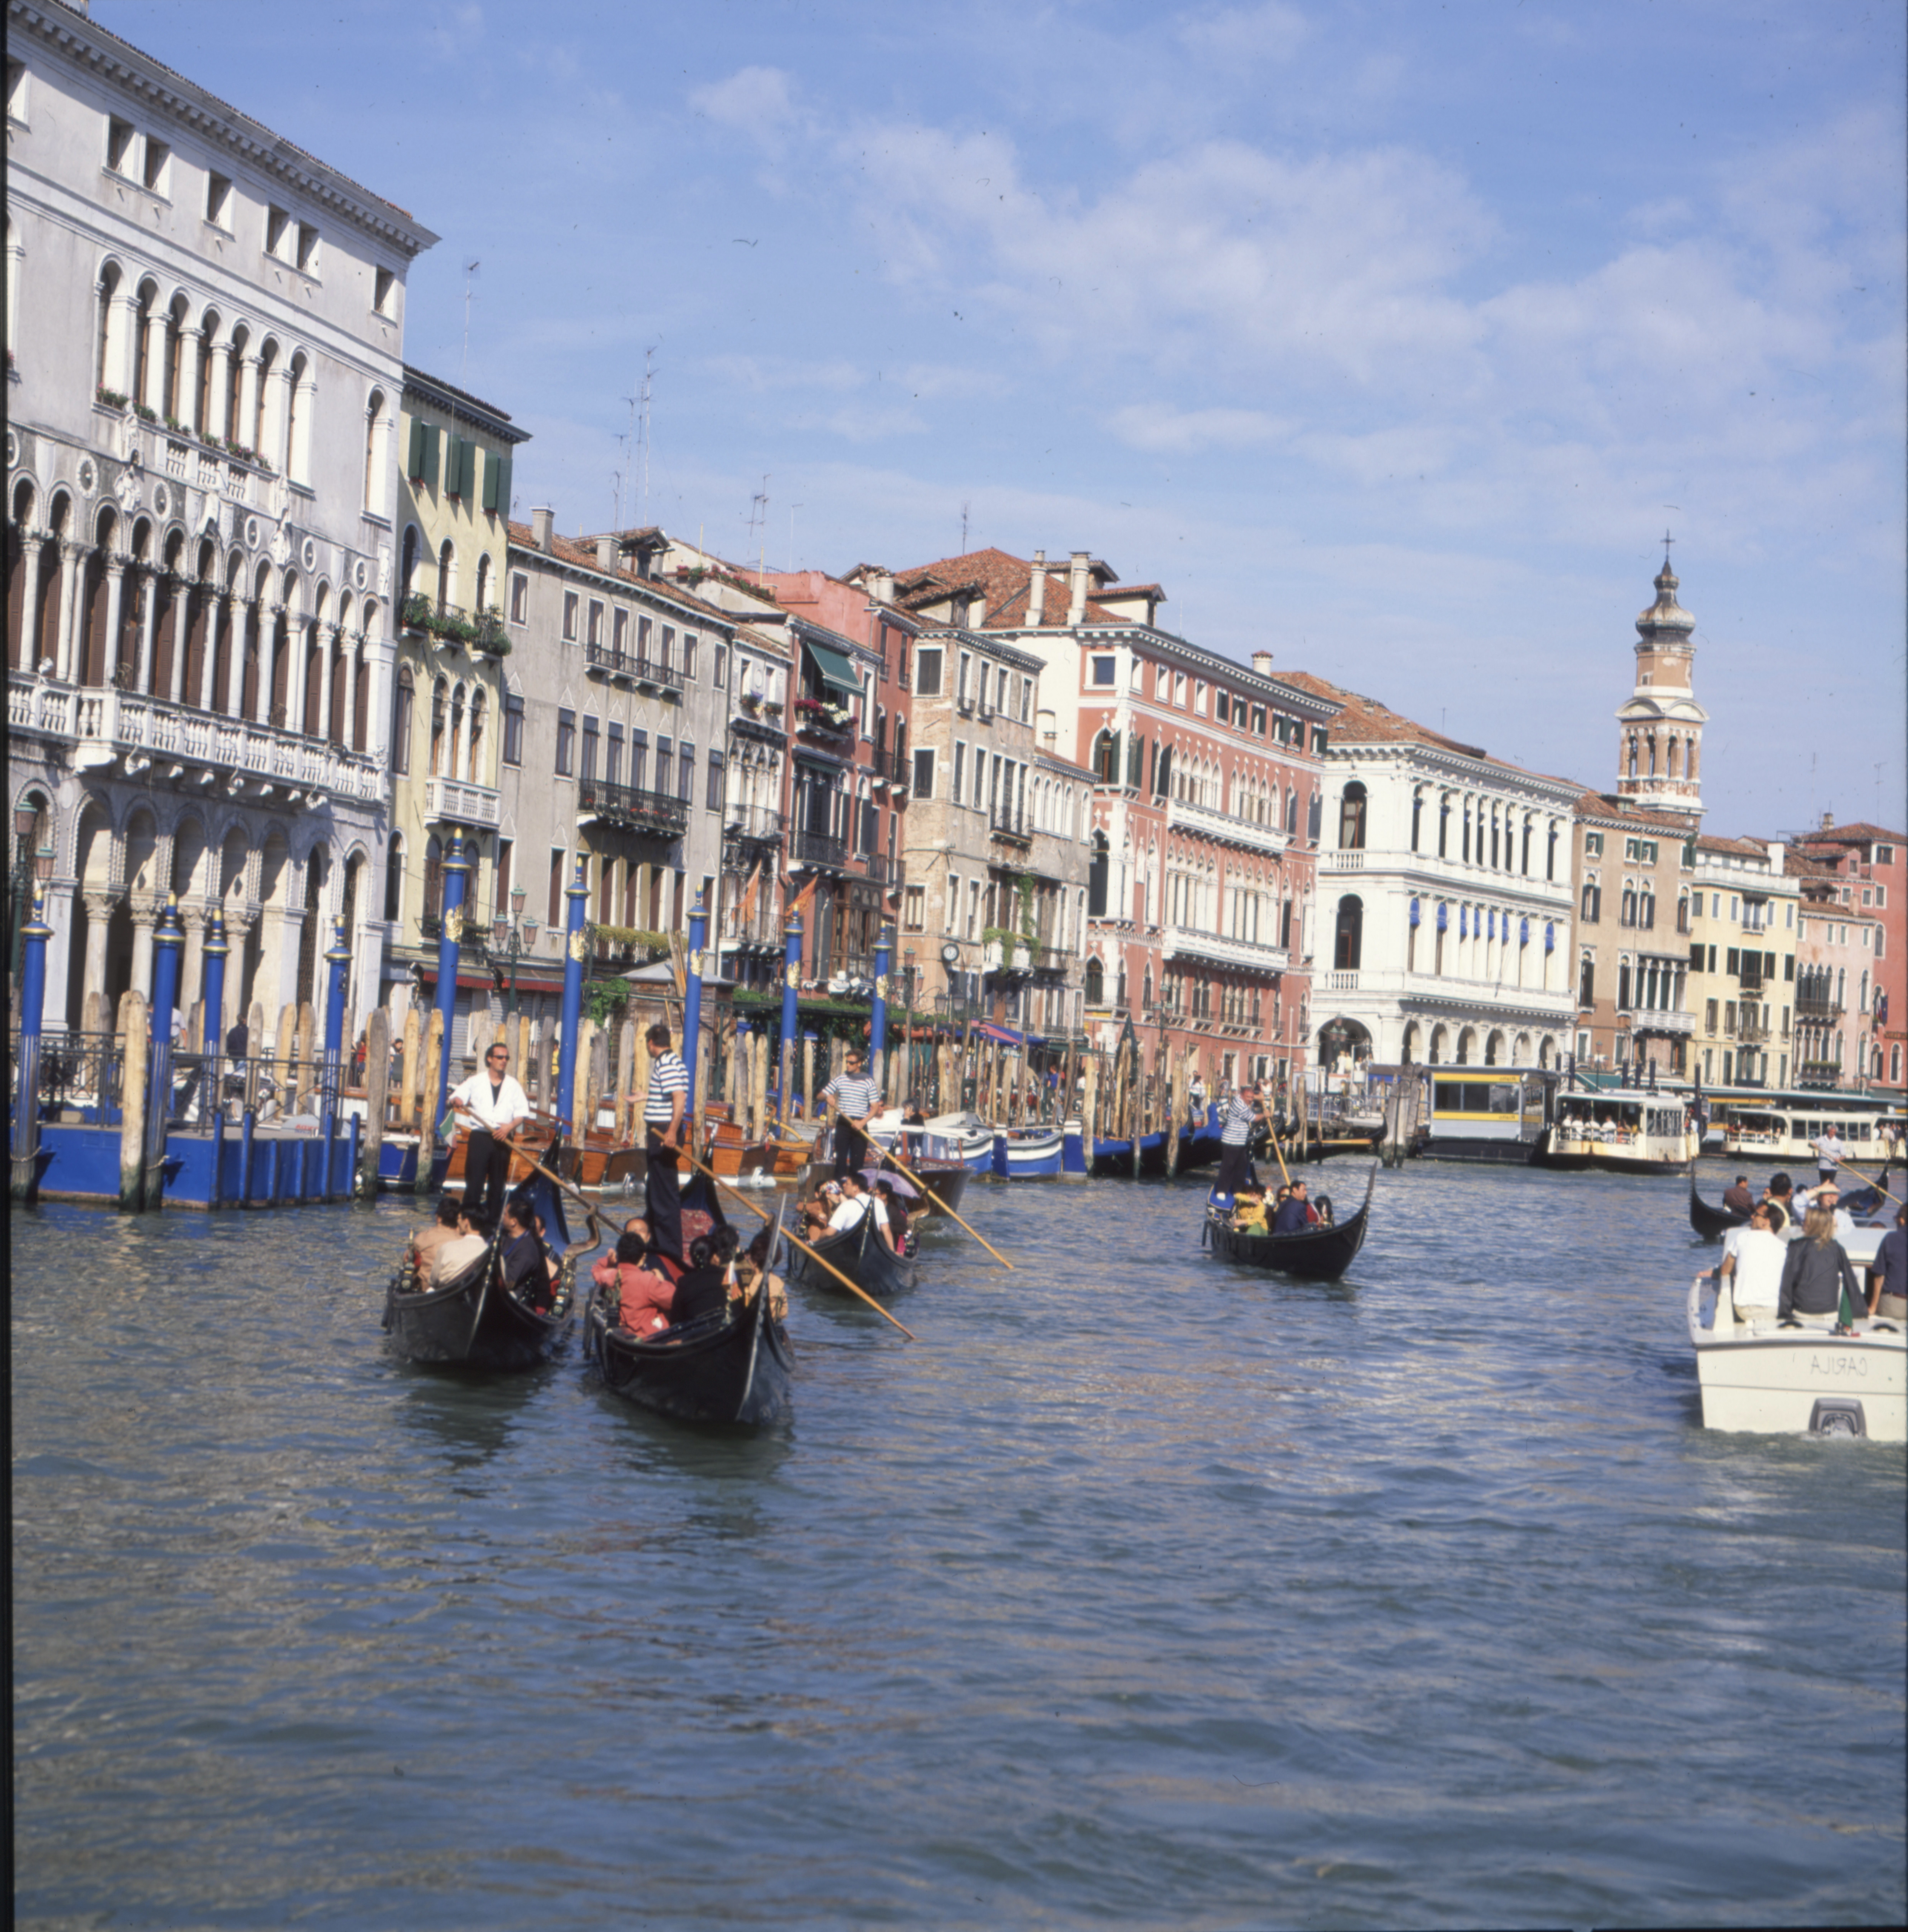 Reg Riemer Hasselblad_Venice canal from Rialto bridge.jpg